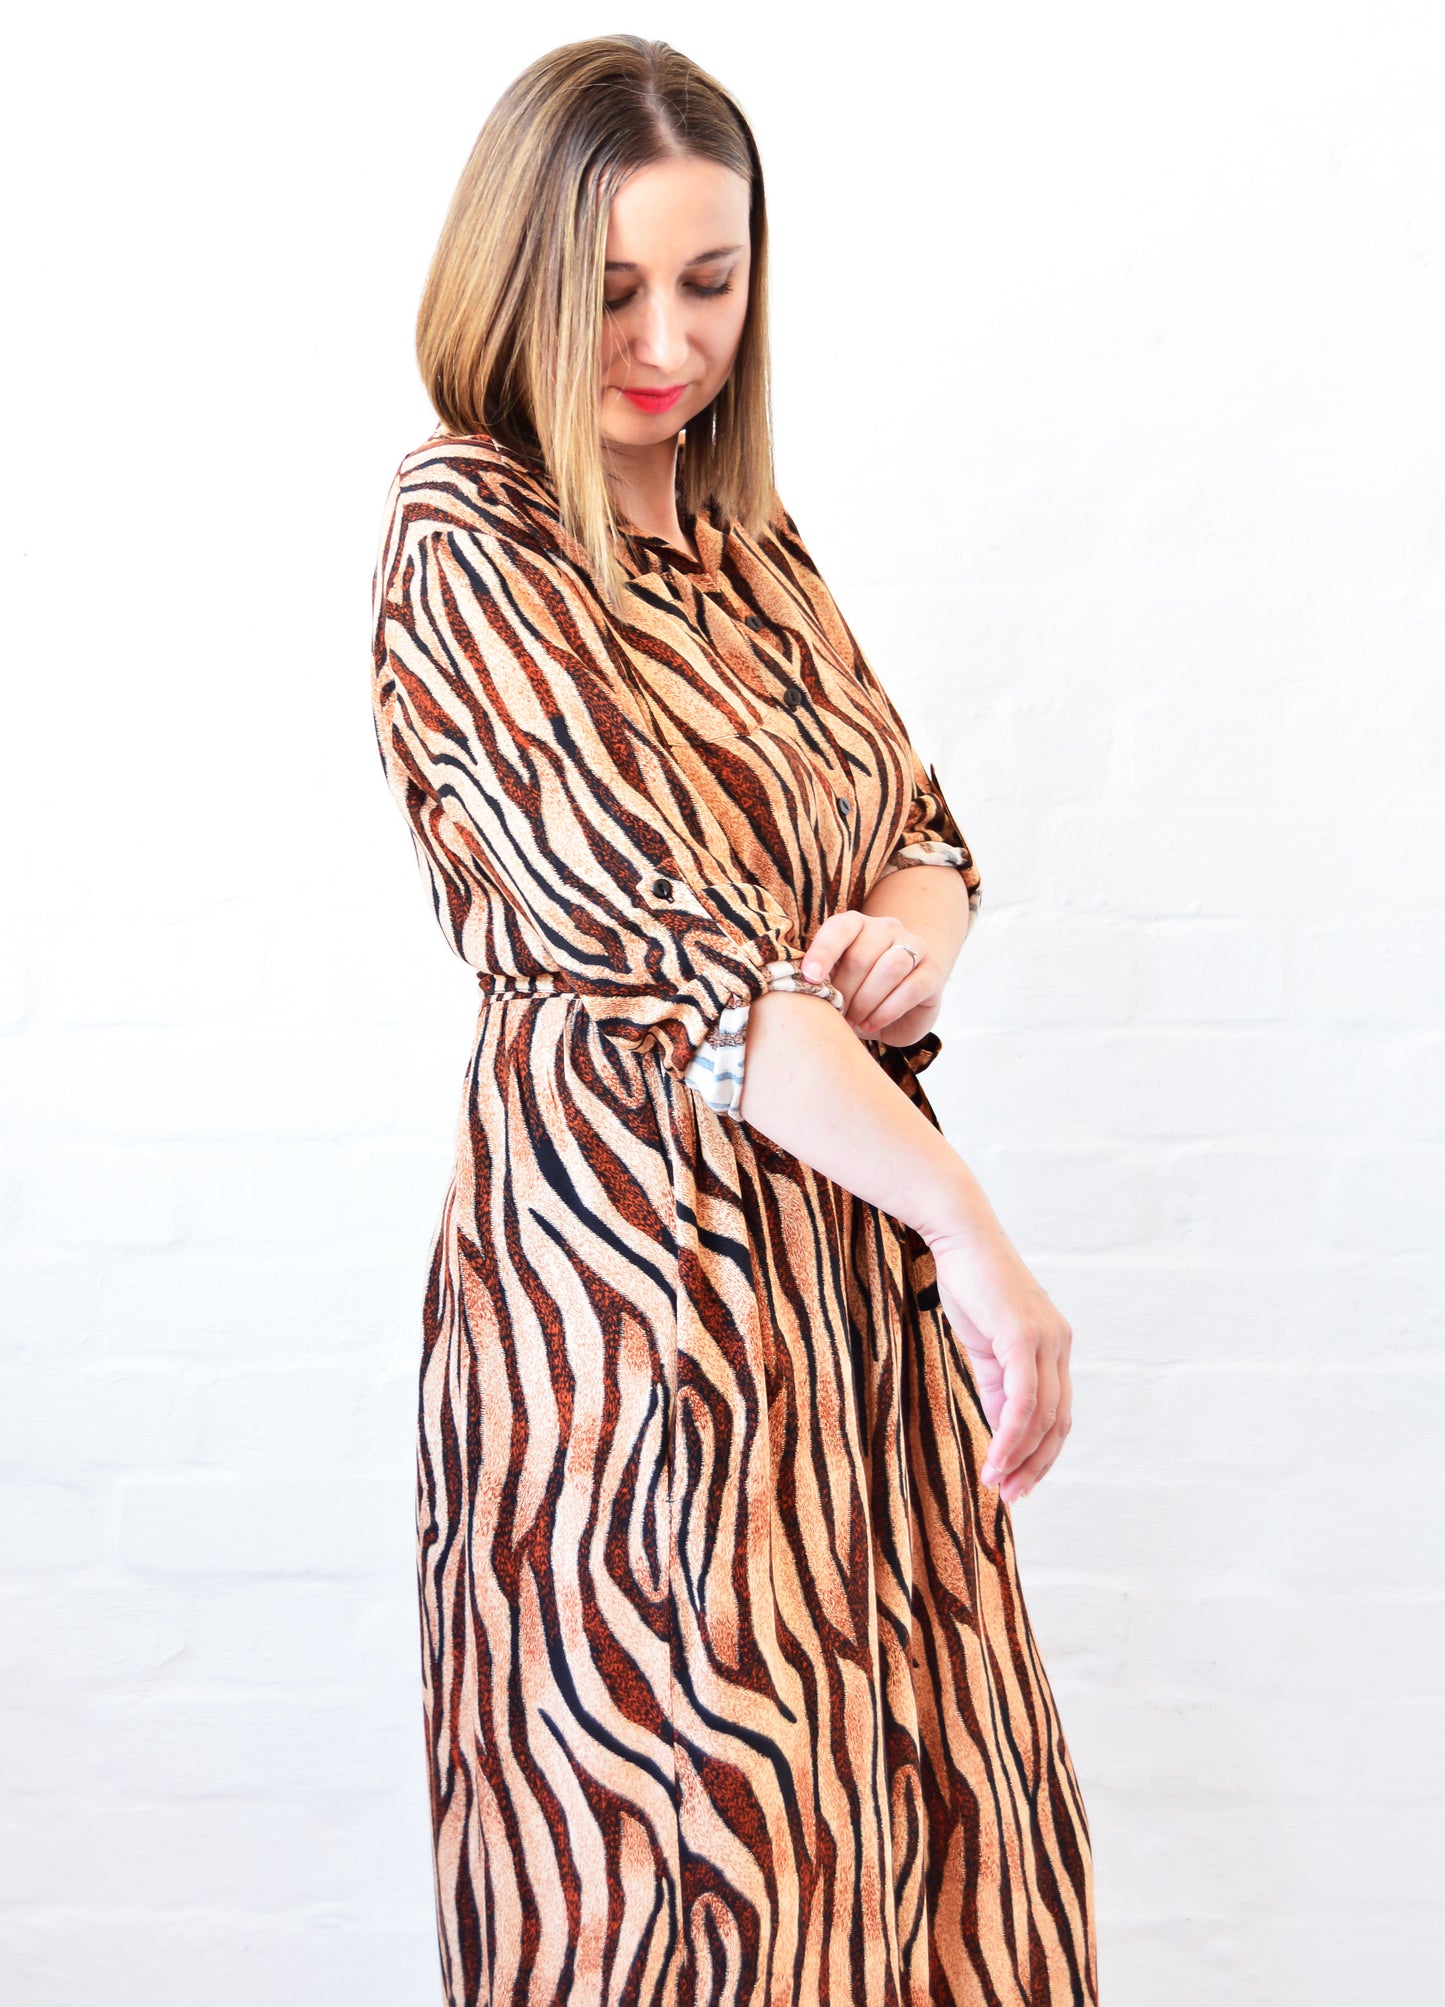 Ivy Shirt Dress in caramel Tiger Wave print size 32- 40